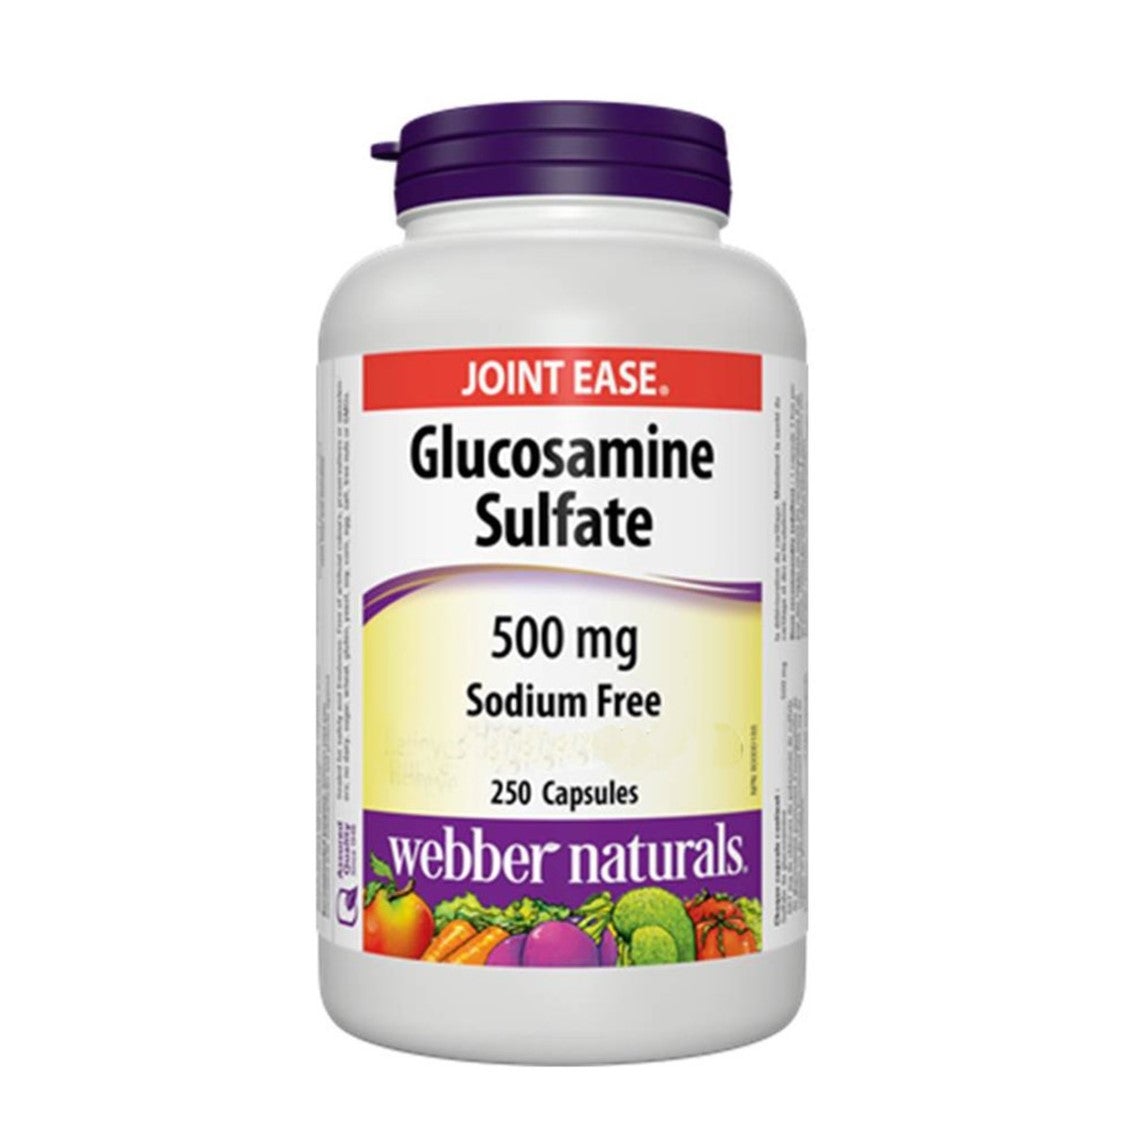 webber-naturals-sodium-free-glucosamine-sulfate-500mg-250capsules